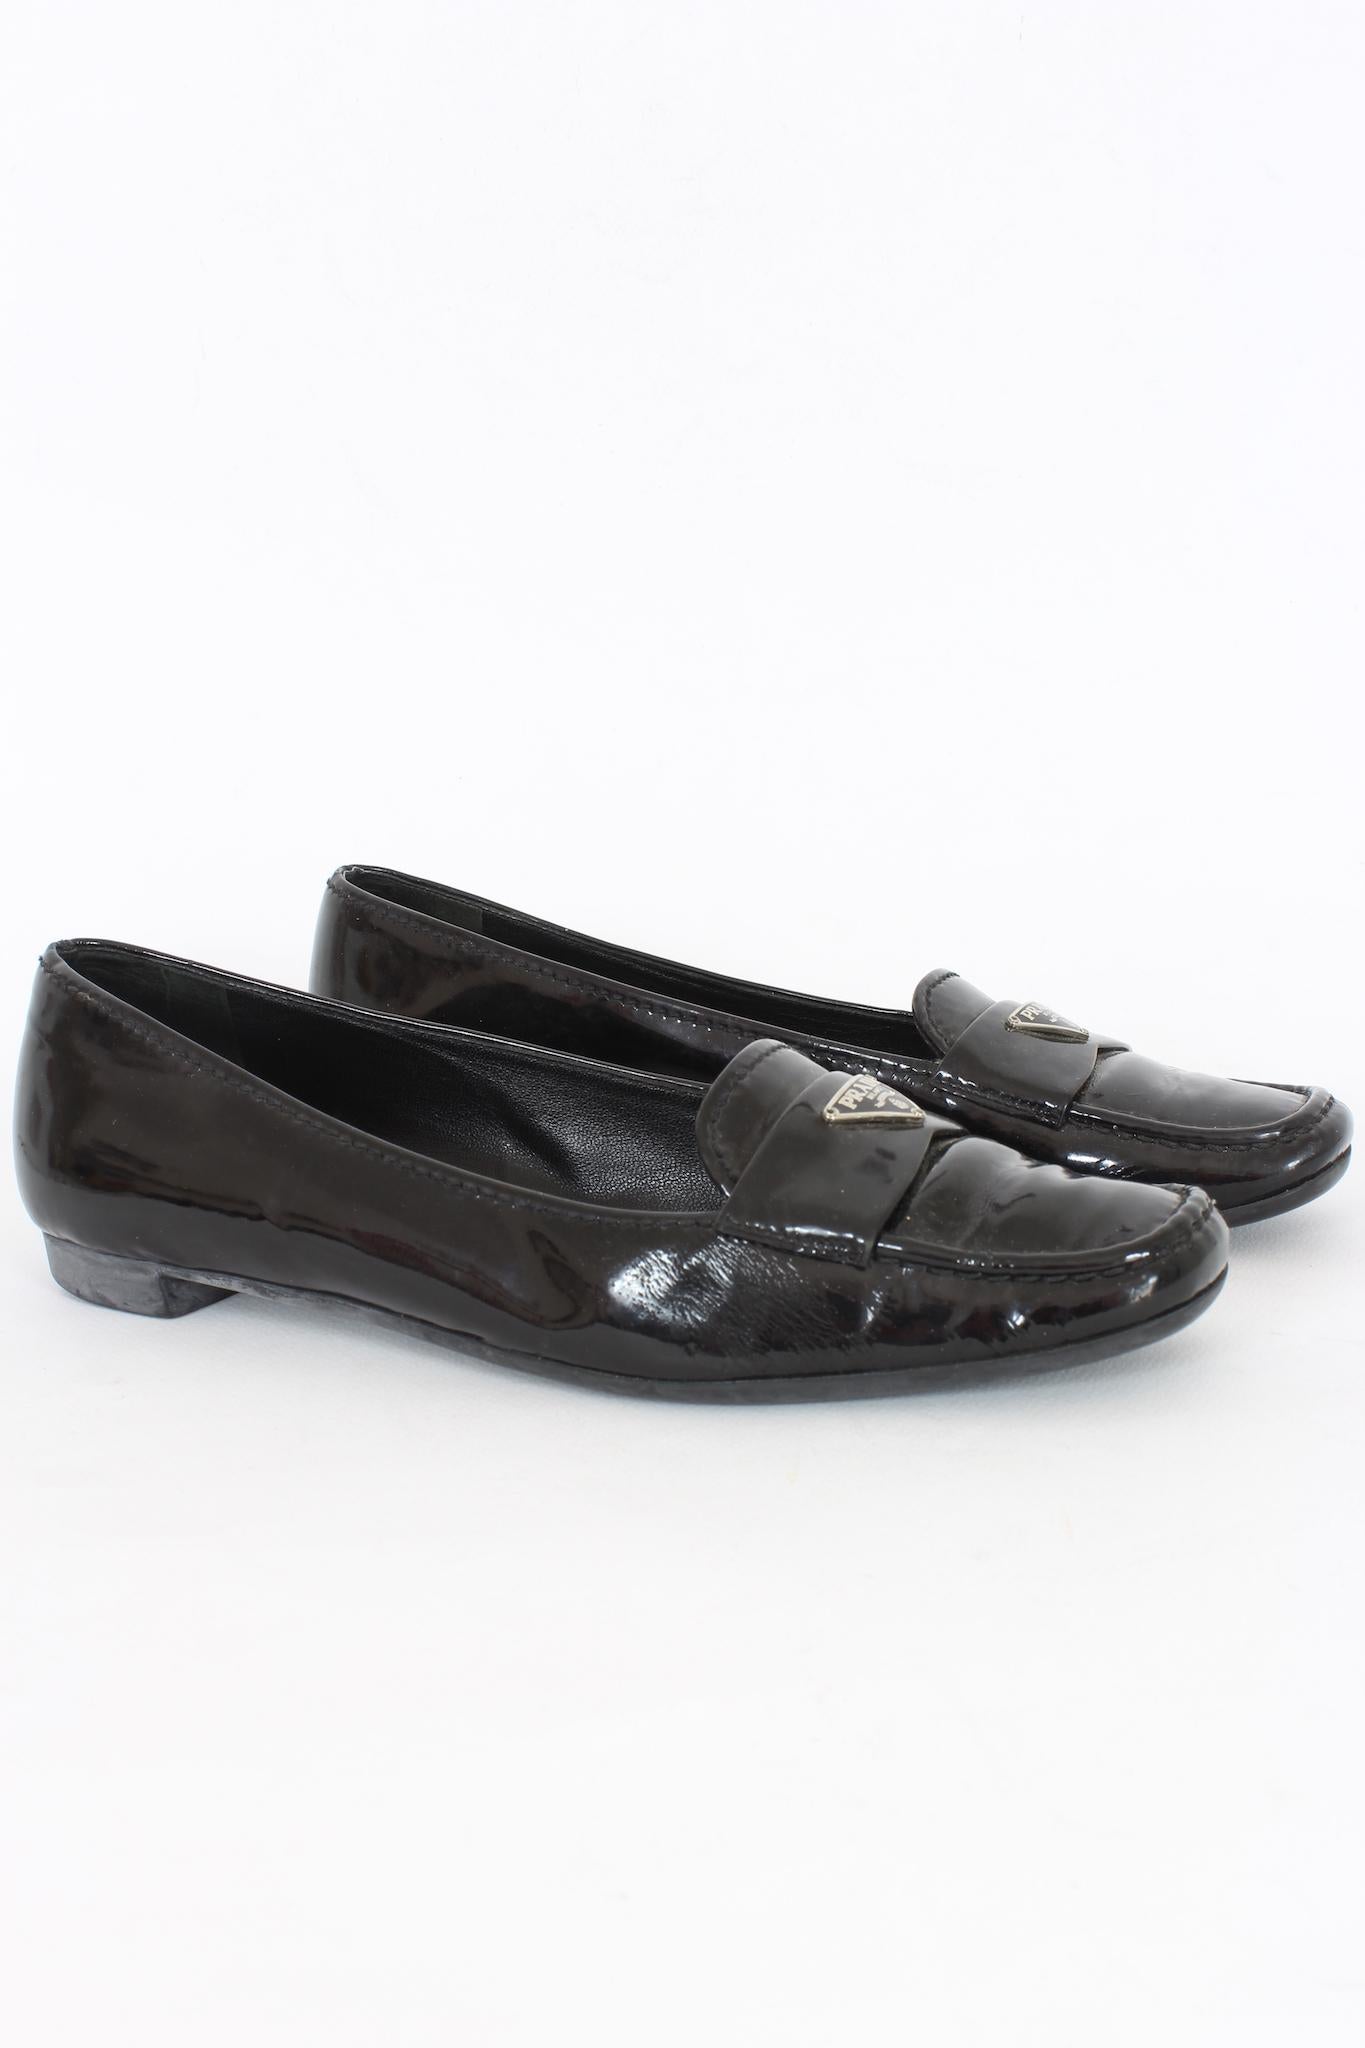 Women's Prada Black Patent Leather Vintage Moccasins Shoes 90s